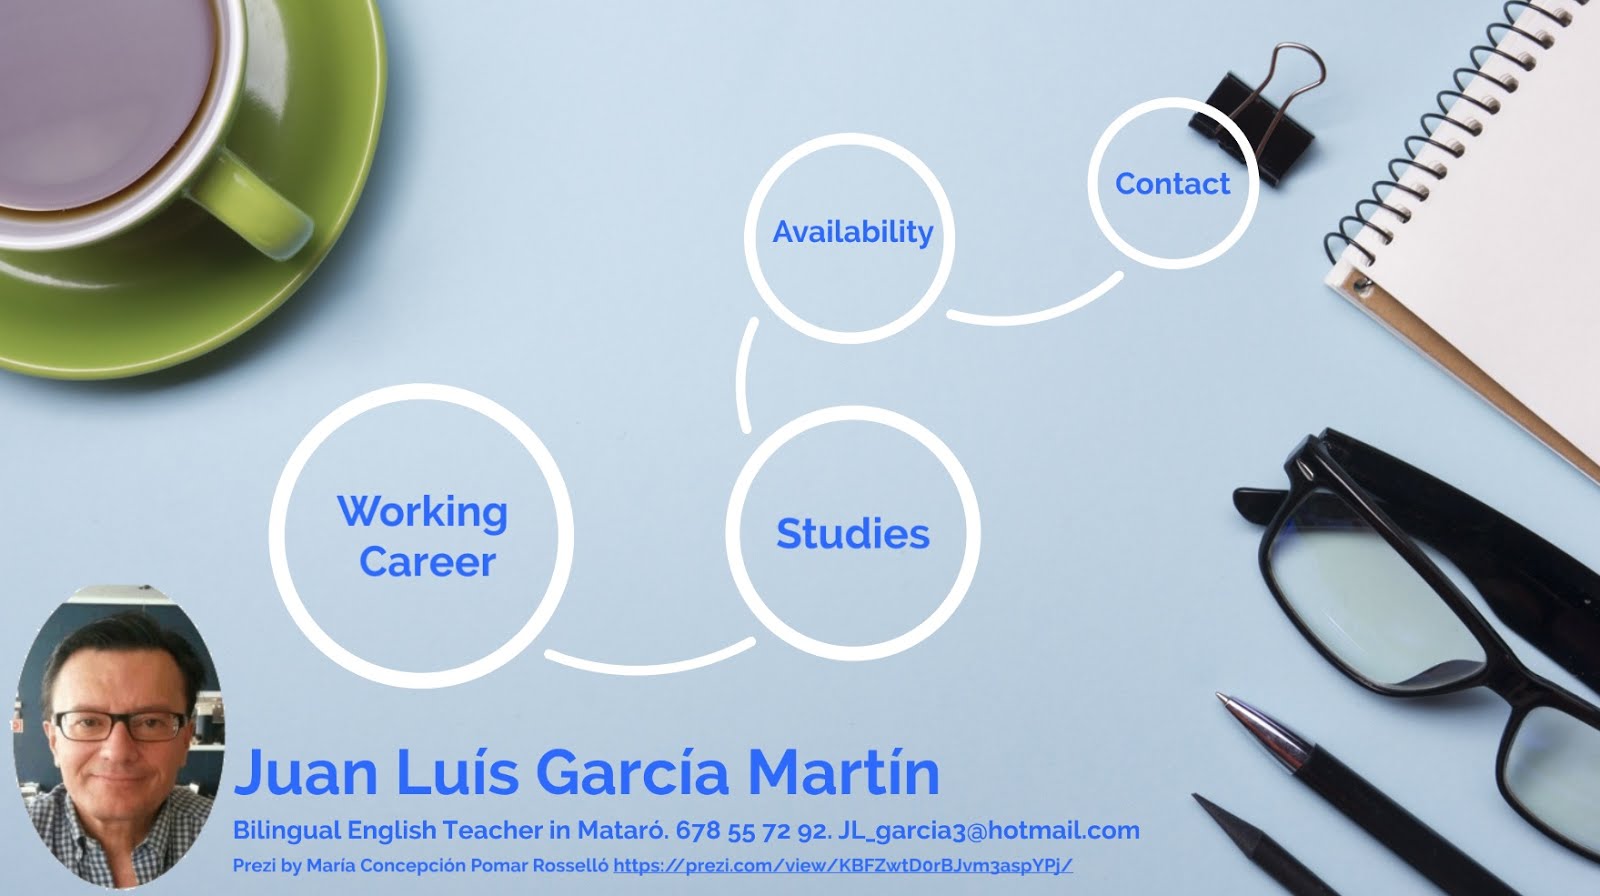 Juan Luís García Martín's Interactive CV